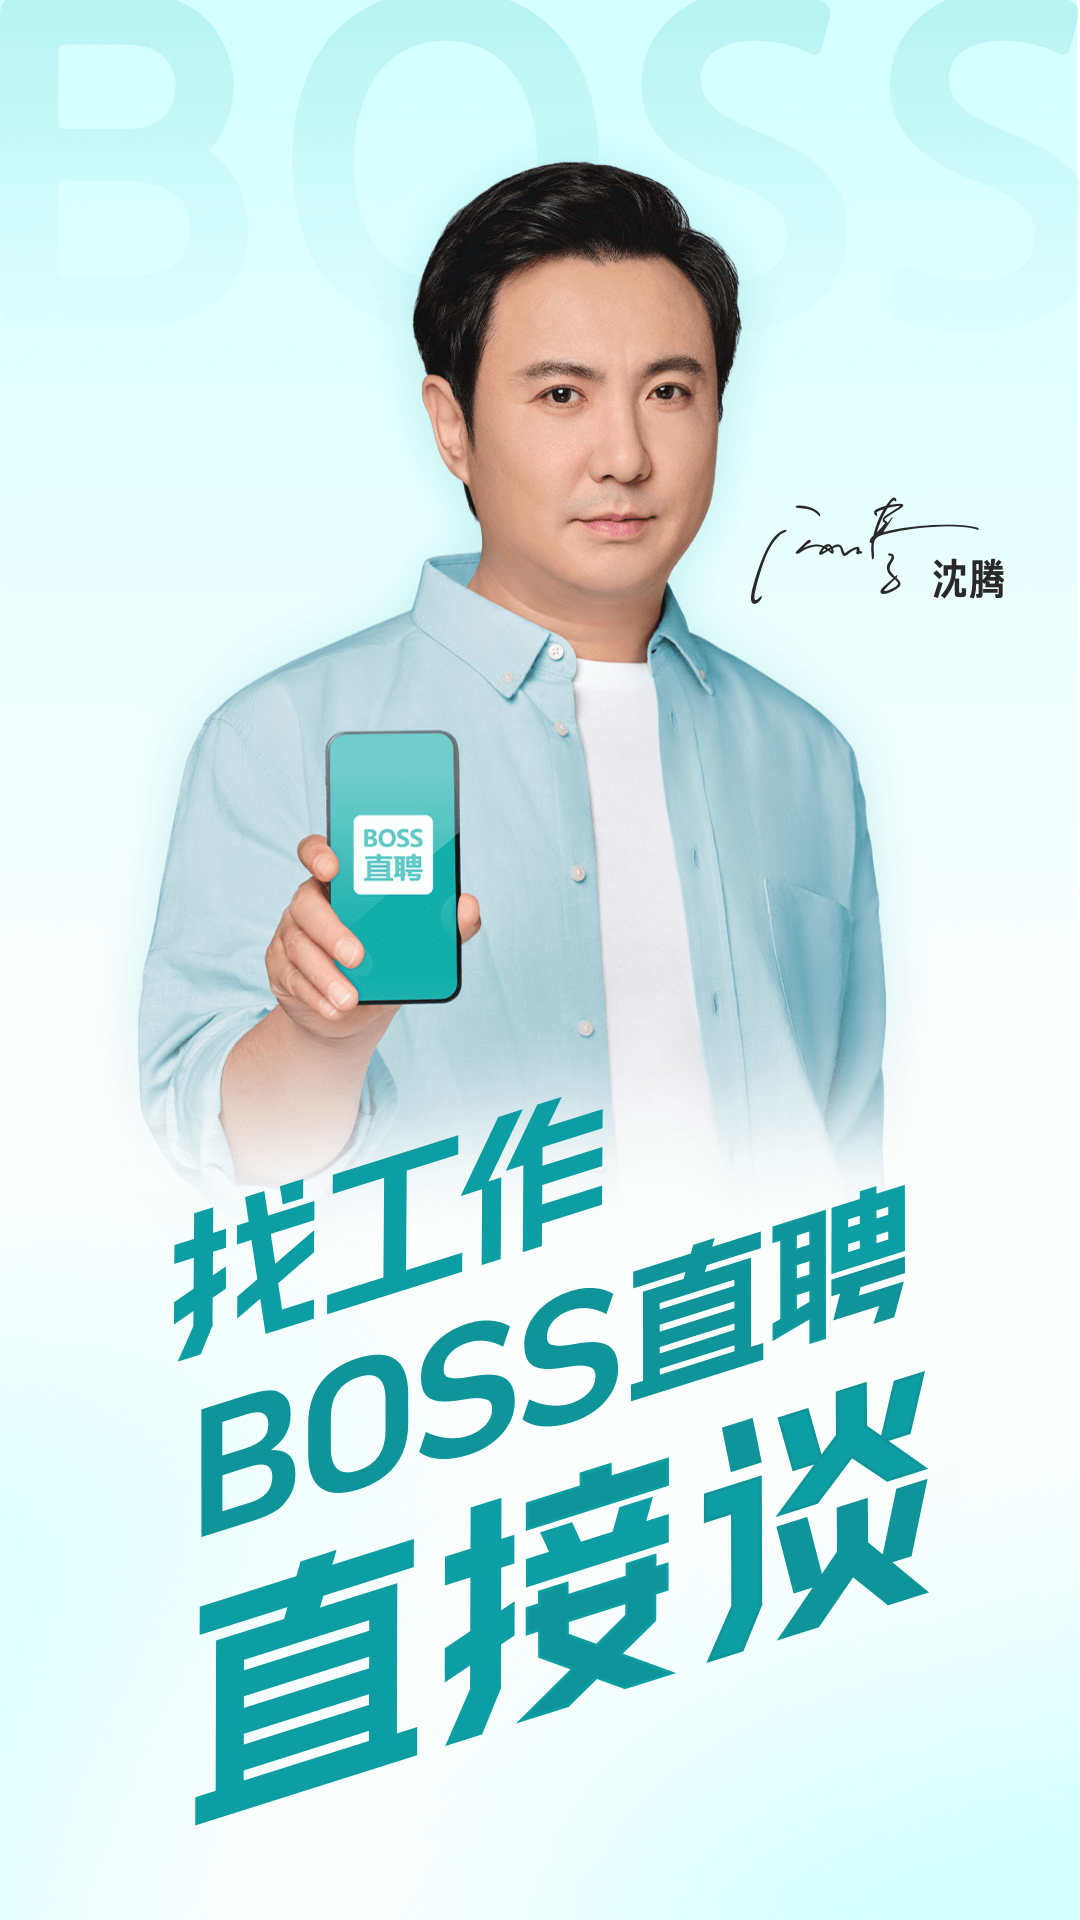 boss直聘手机版 v12.061 官方安卓版1